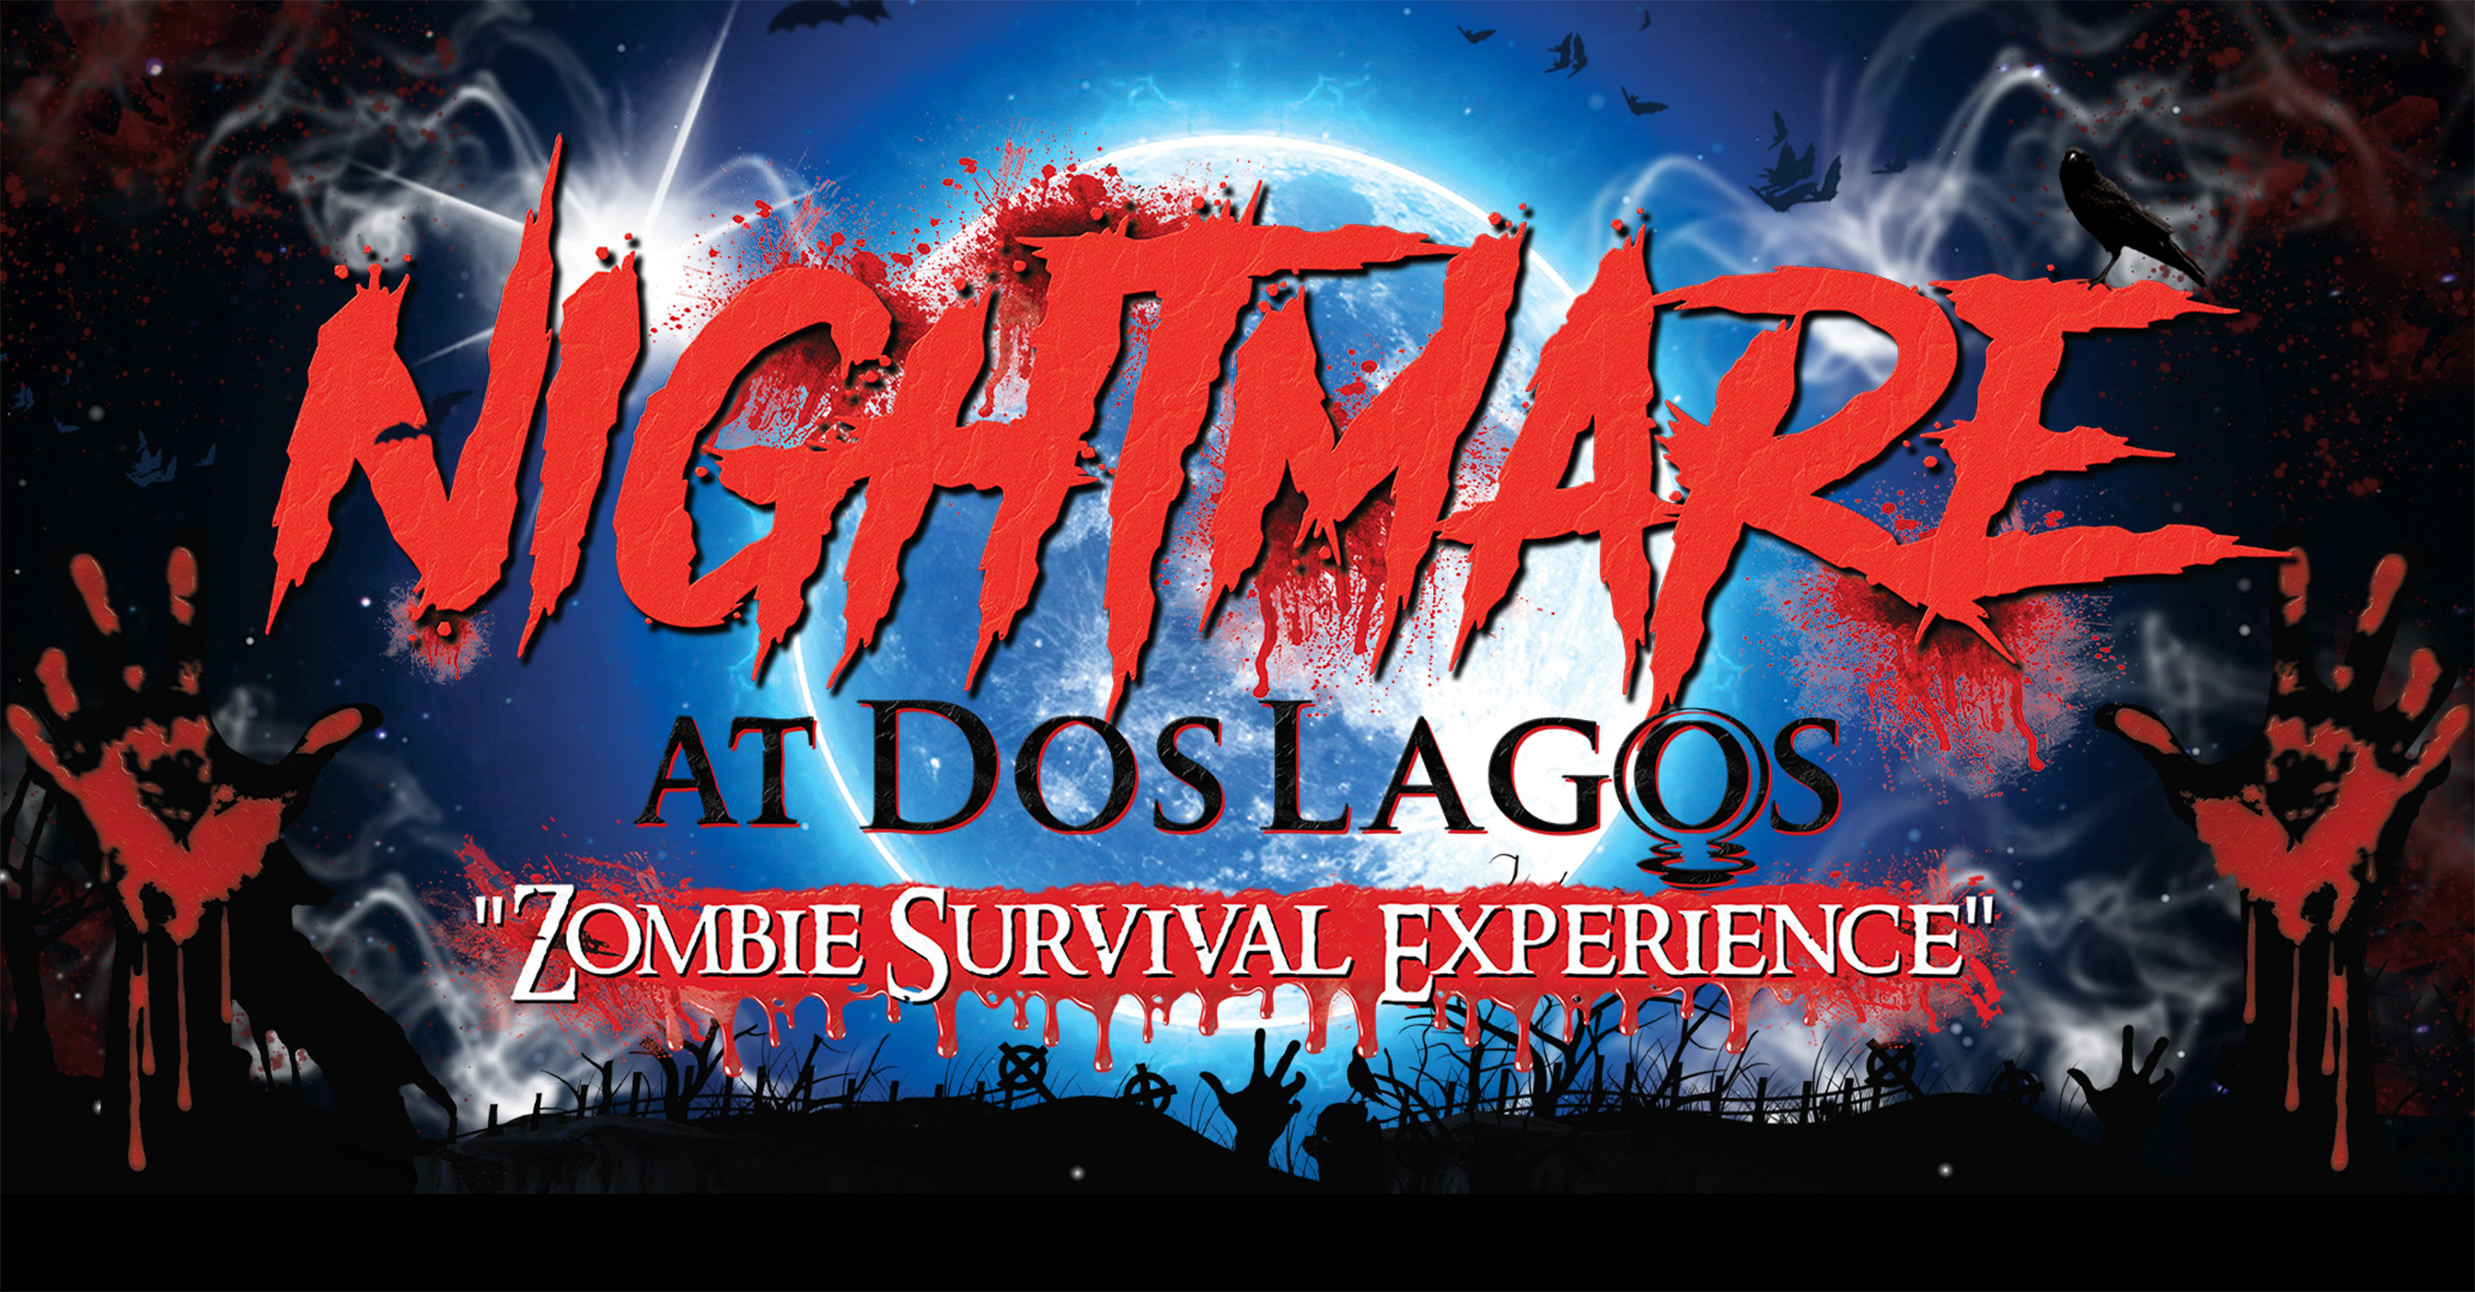 Nightmare at Dos Lagos!